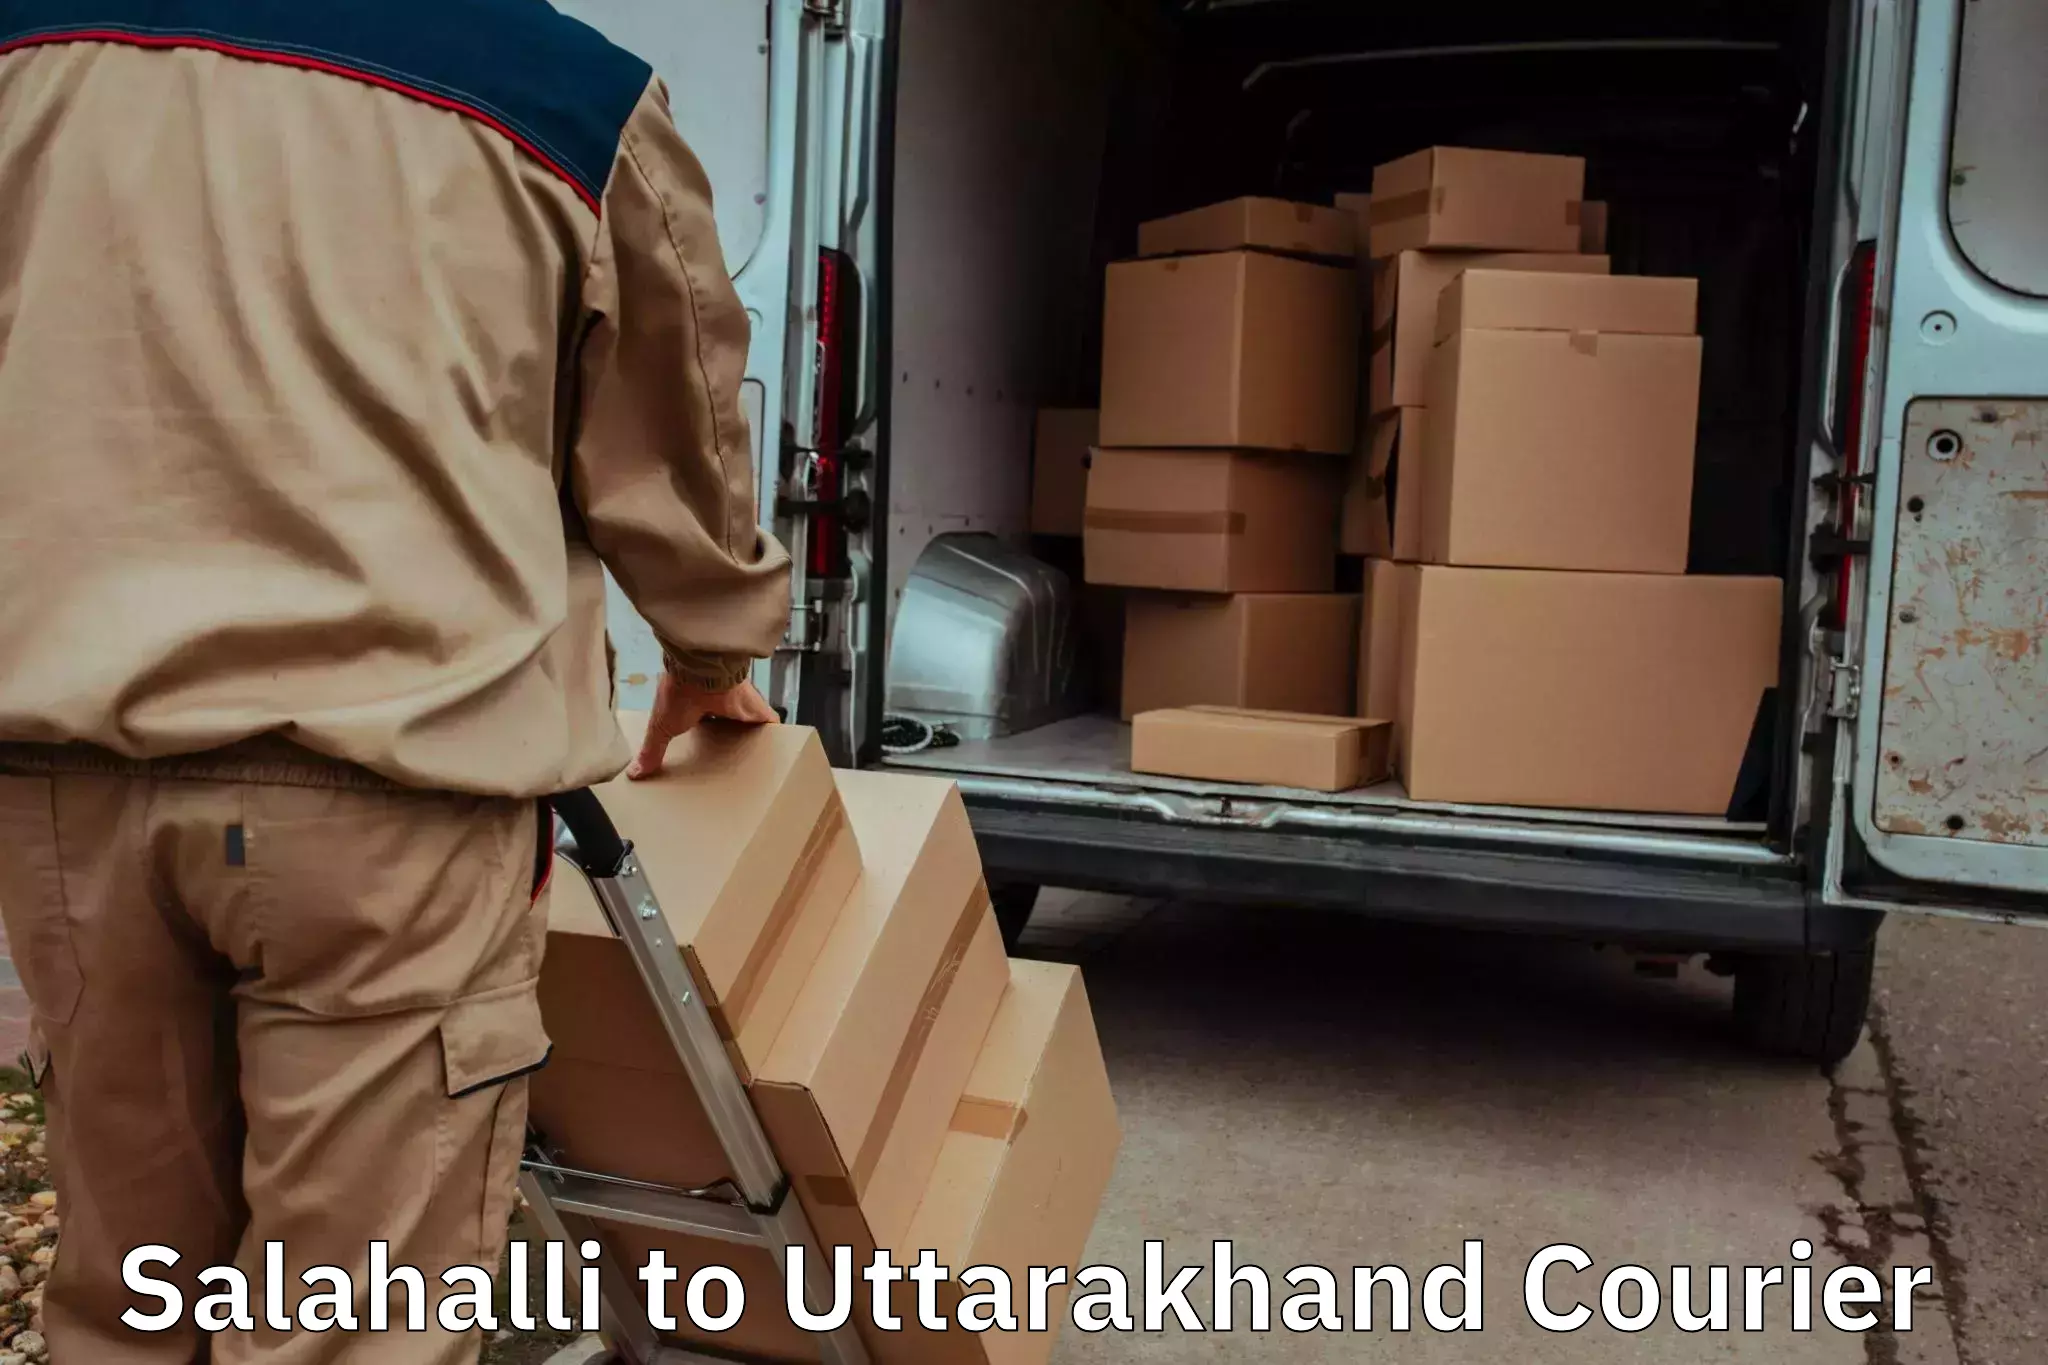 Dependable household movers Salahalli to Rishikesh